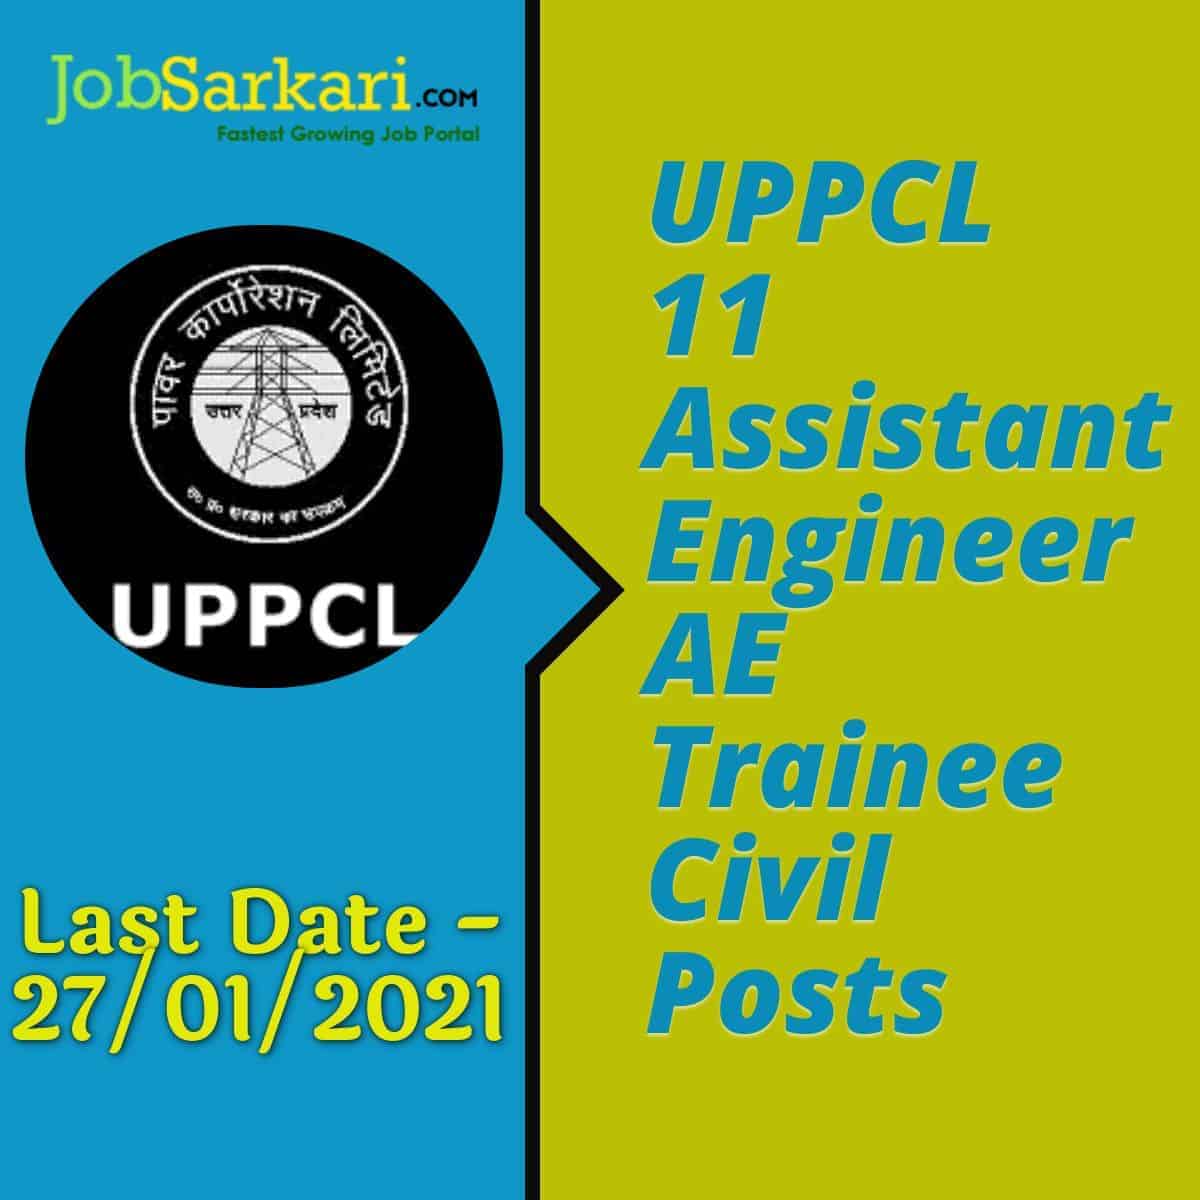 UPPCL 11 Assistant Engineer AE Trainee Civil Posts